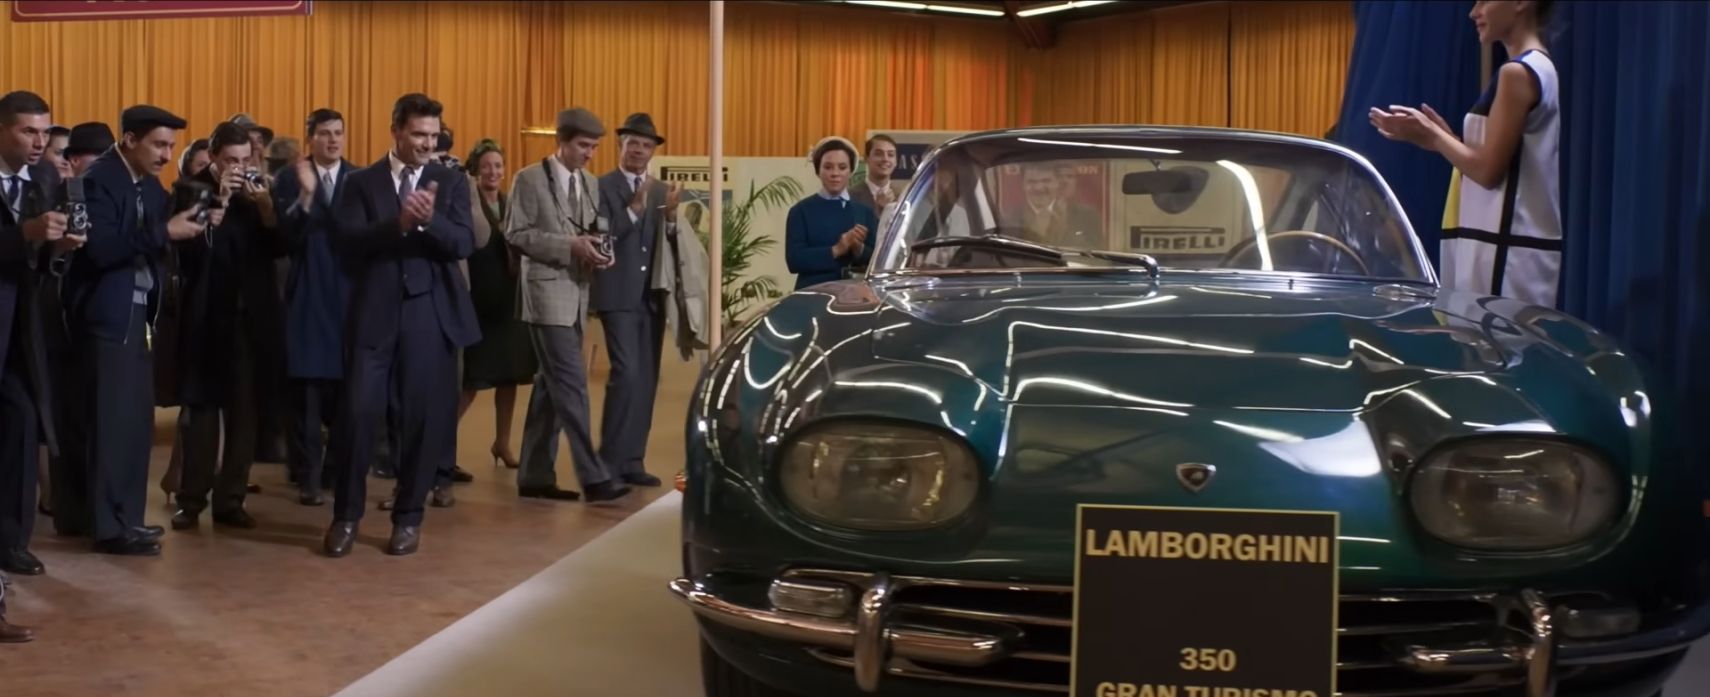 Lamborghini: The Man Behind The Legend' Trailer Watch